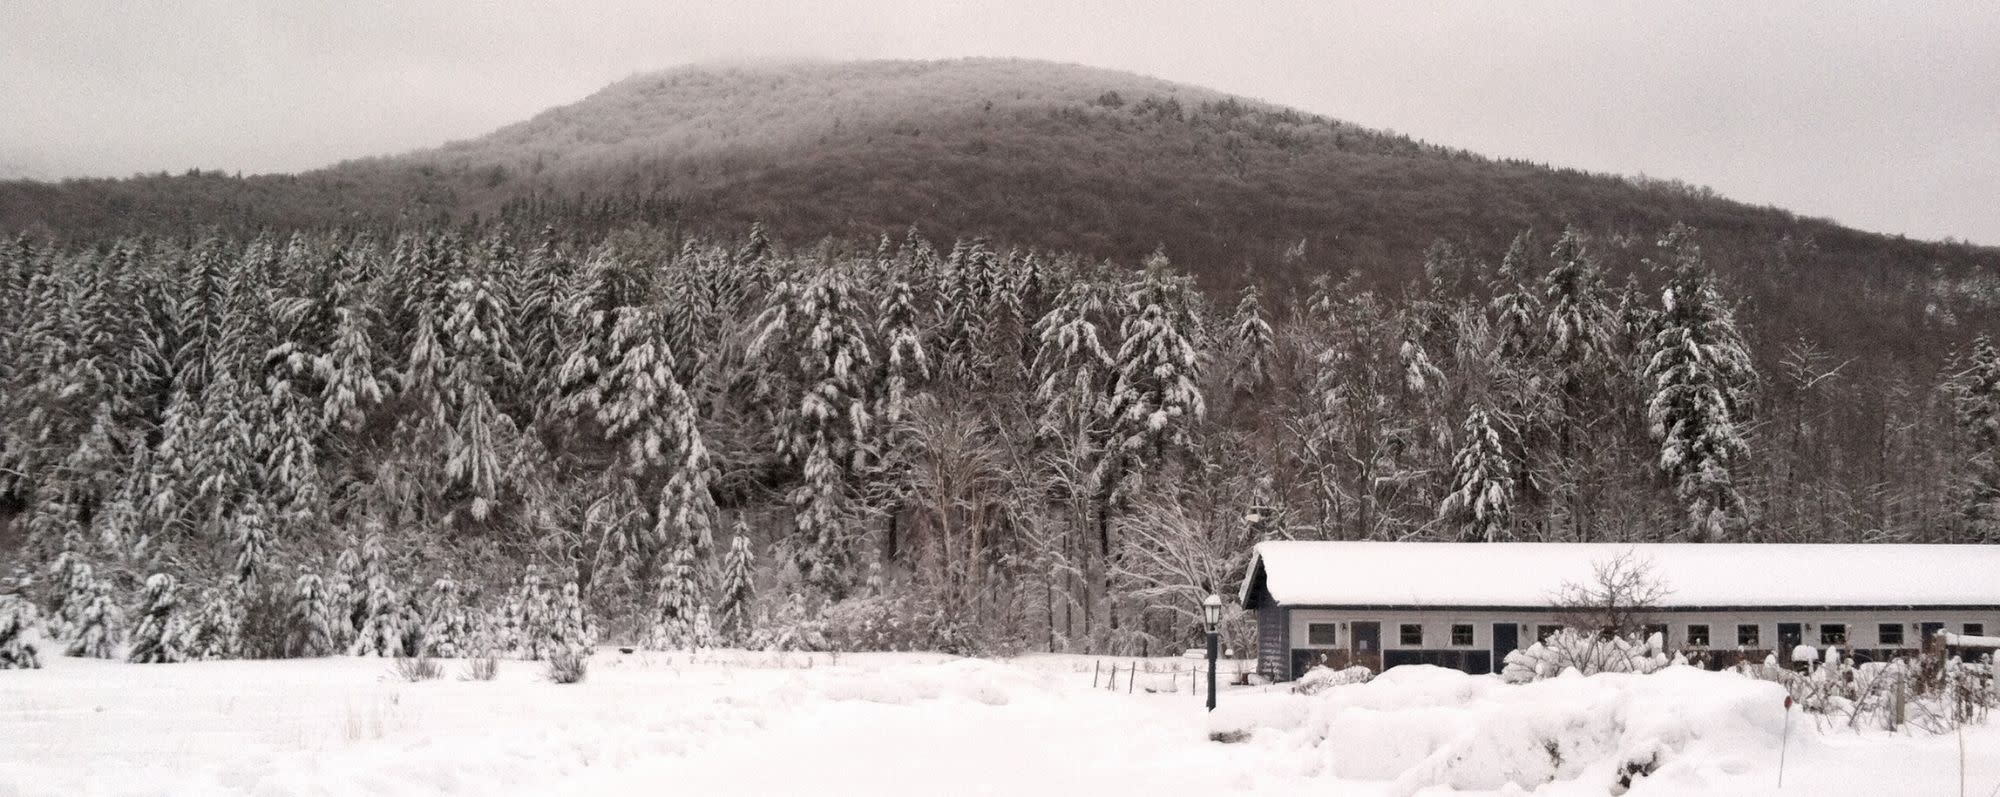 Spruceton Inn in snow - Photo by Casey Scieszka